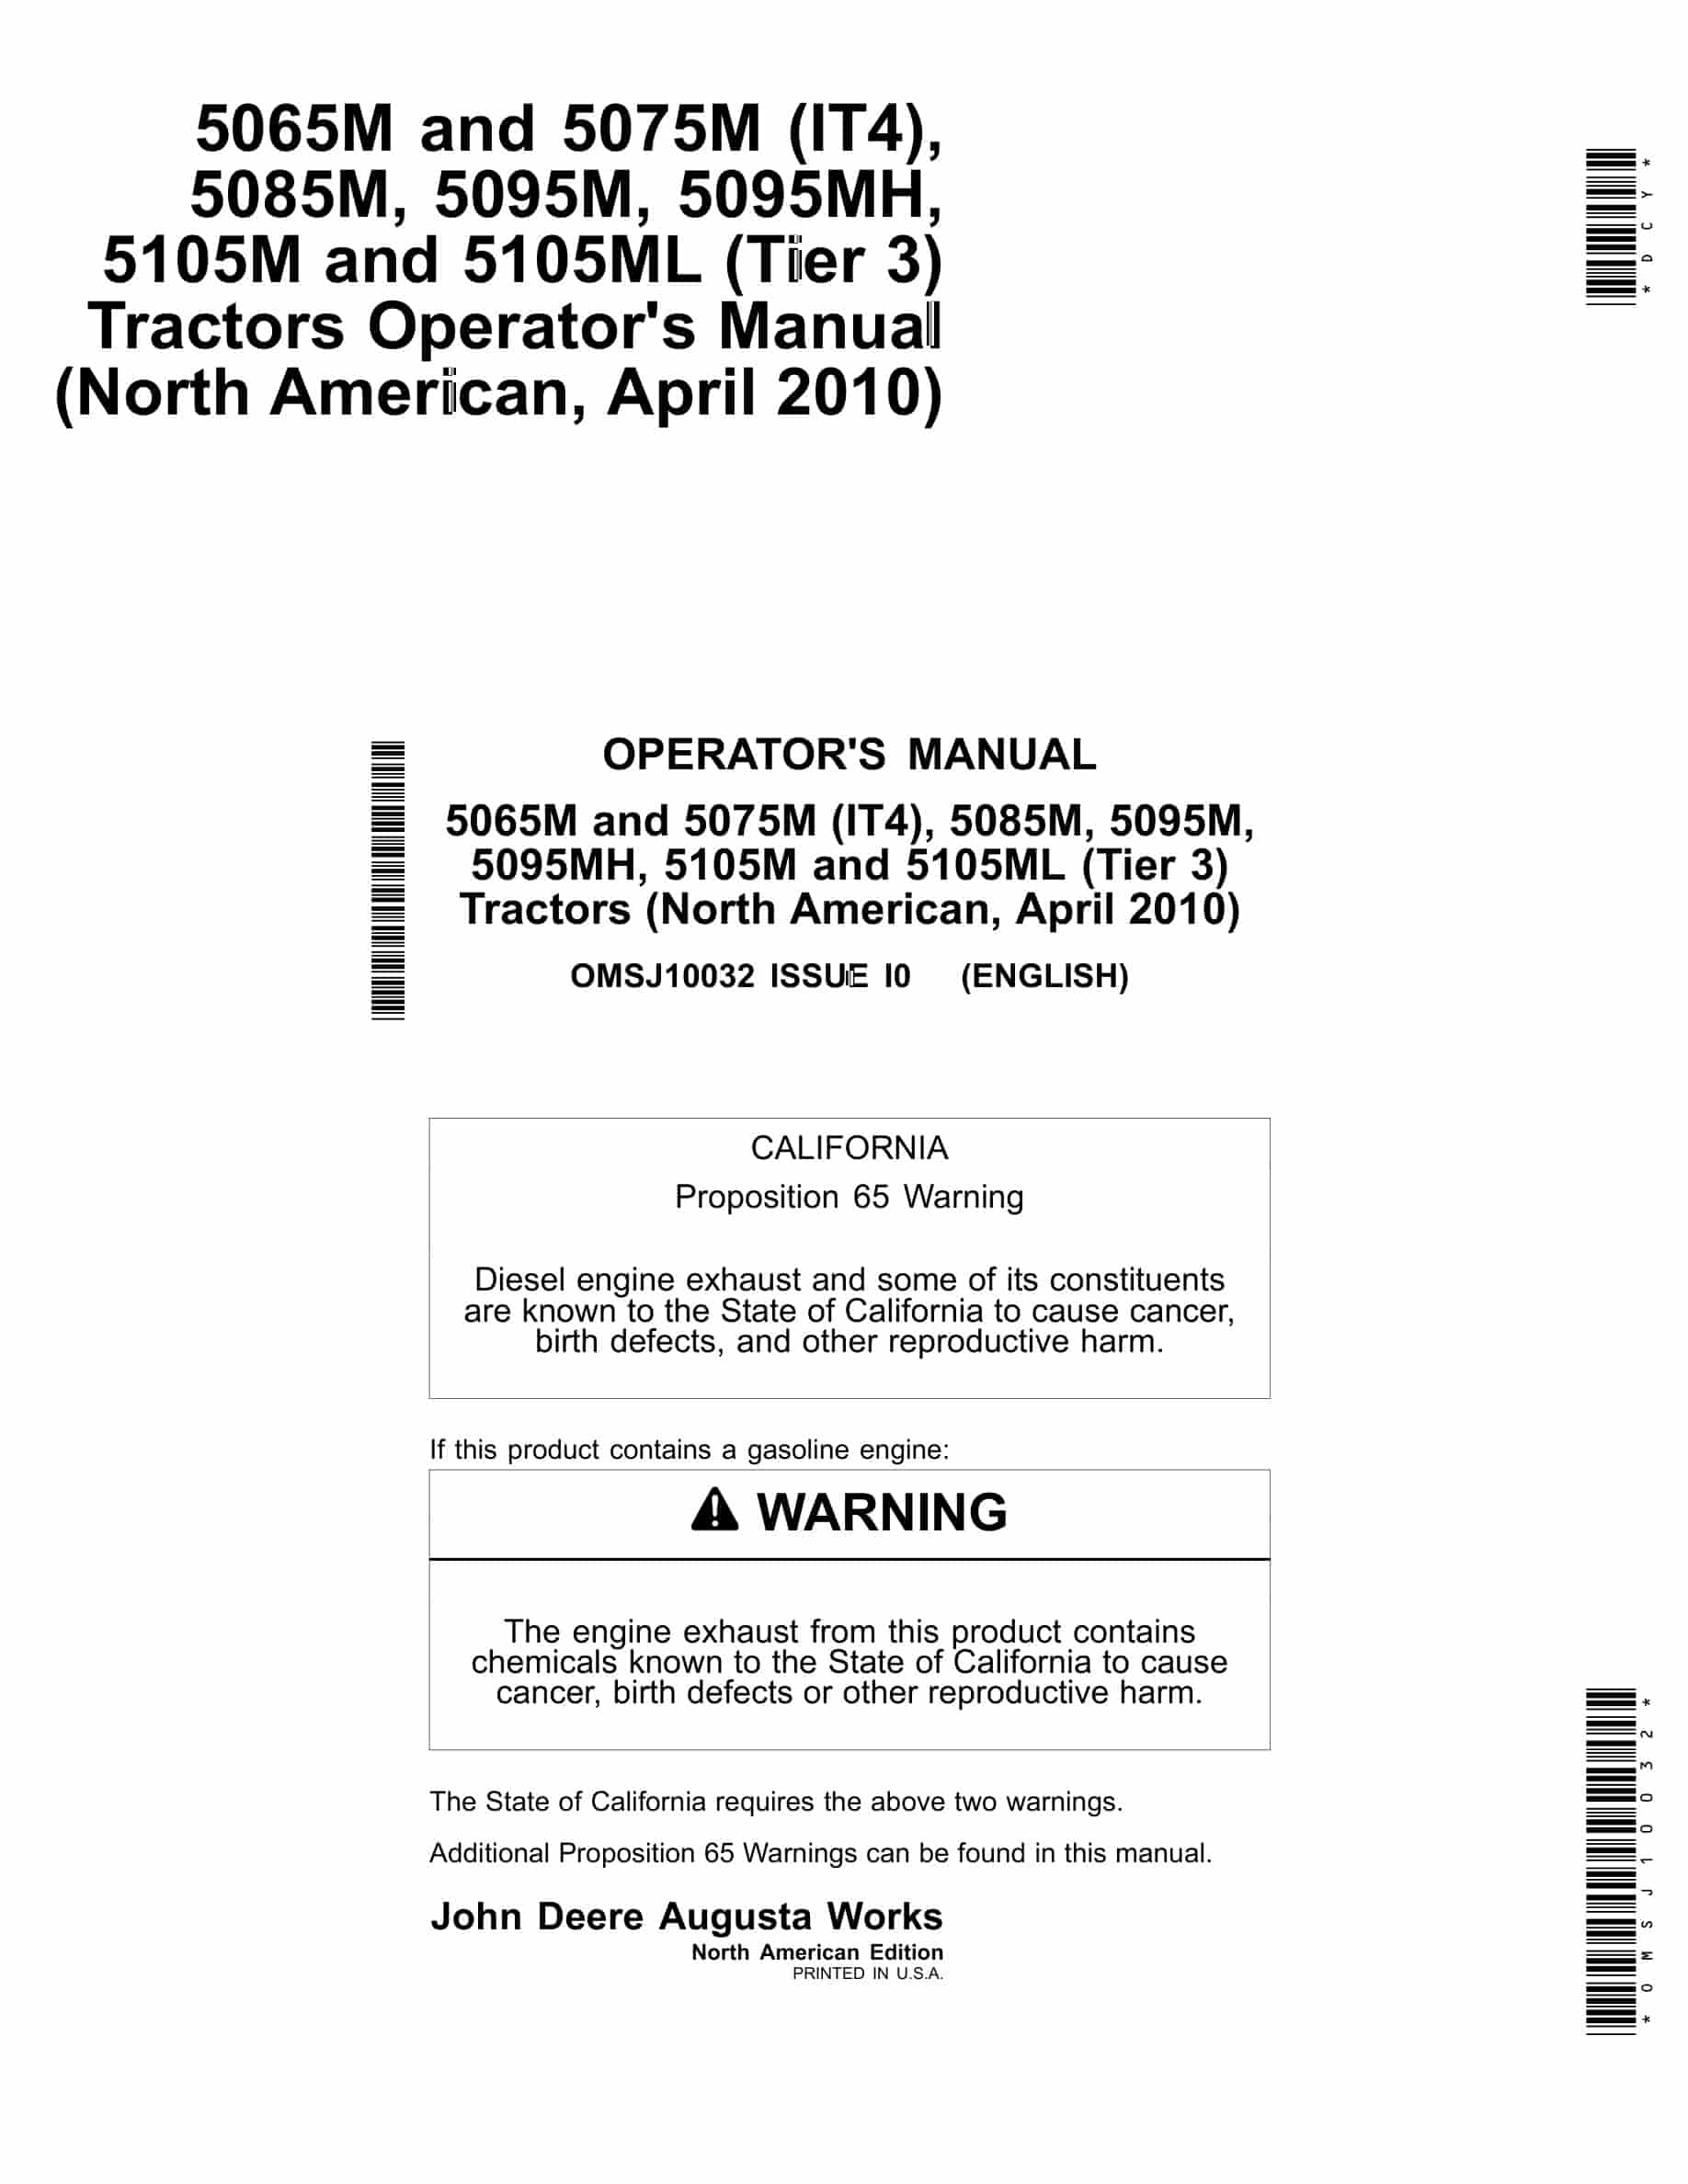 John Deere 5065M and 5075M (IT4), 5085M, 5095M, 5095MH, 5105M and 5105ML (Tier 3) Tractor Operator Manual OMSJ10032-1